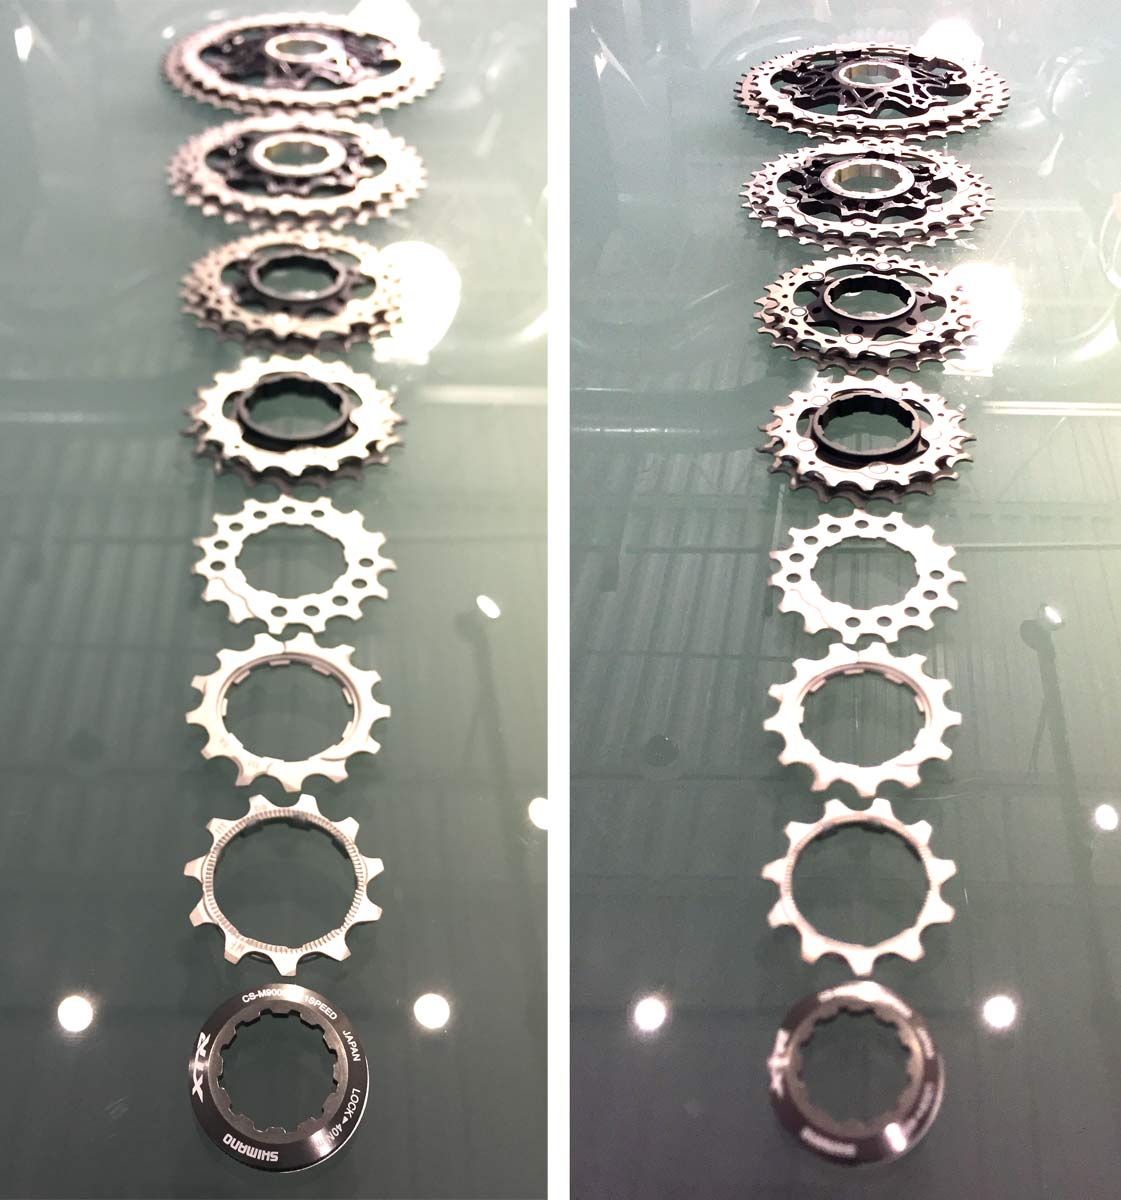 Shimano XTR M9000 group's actual weights & detail photos -